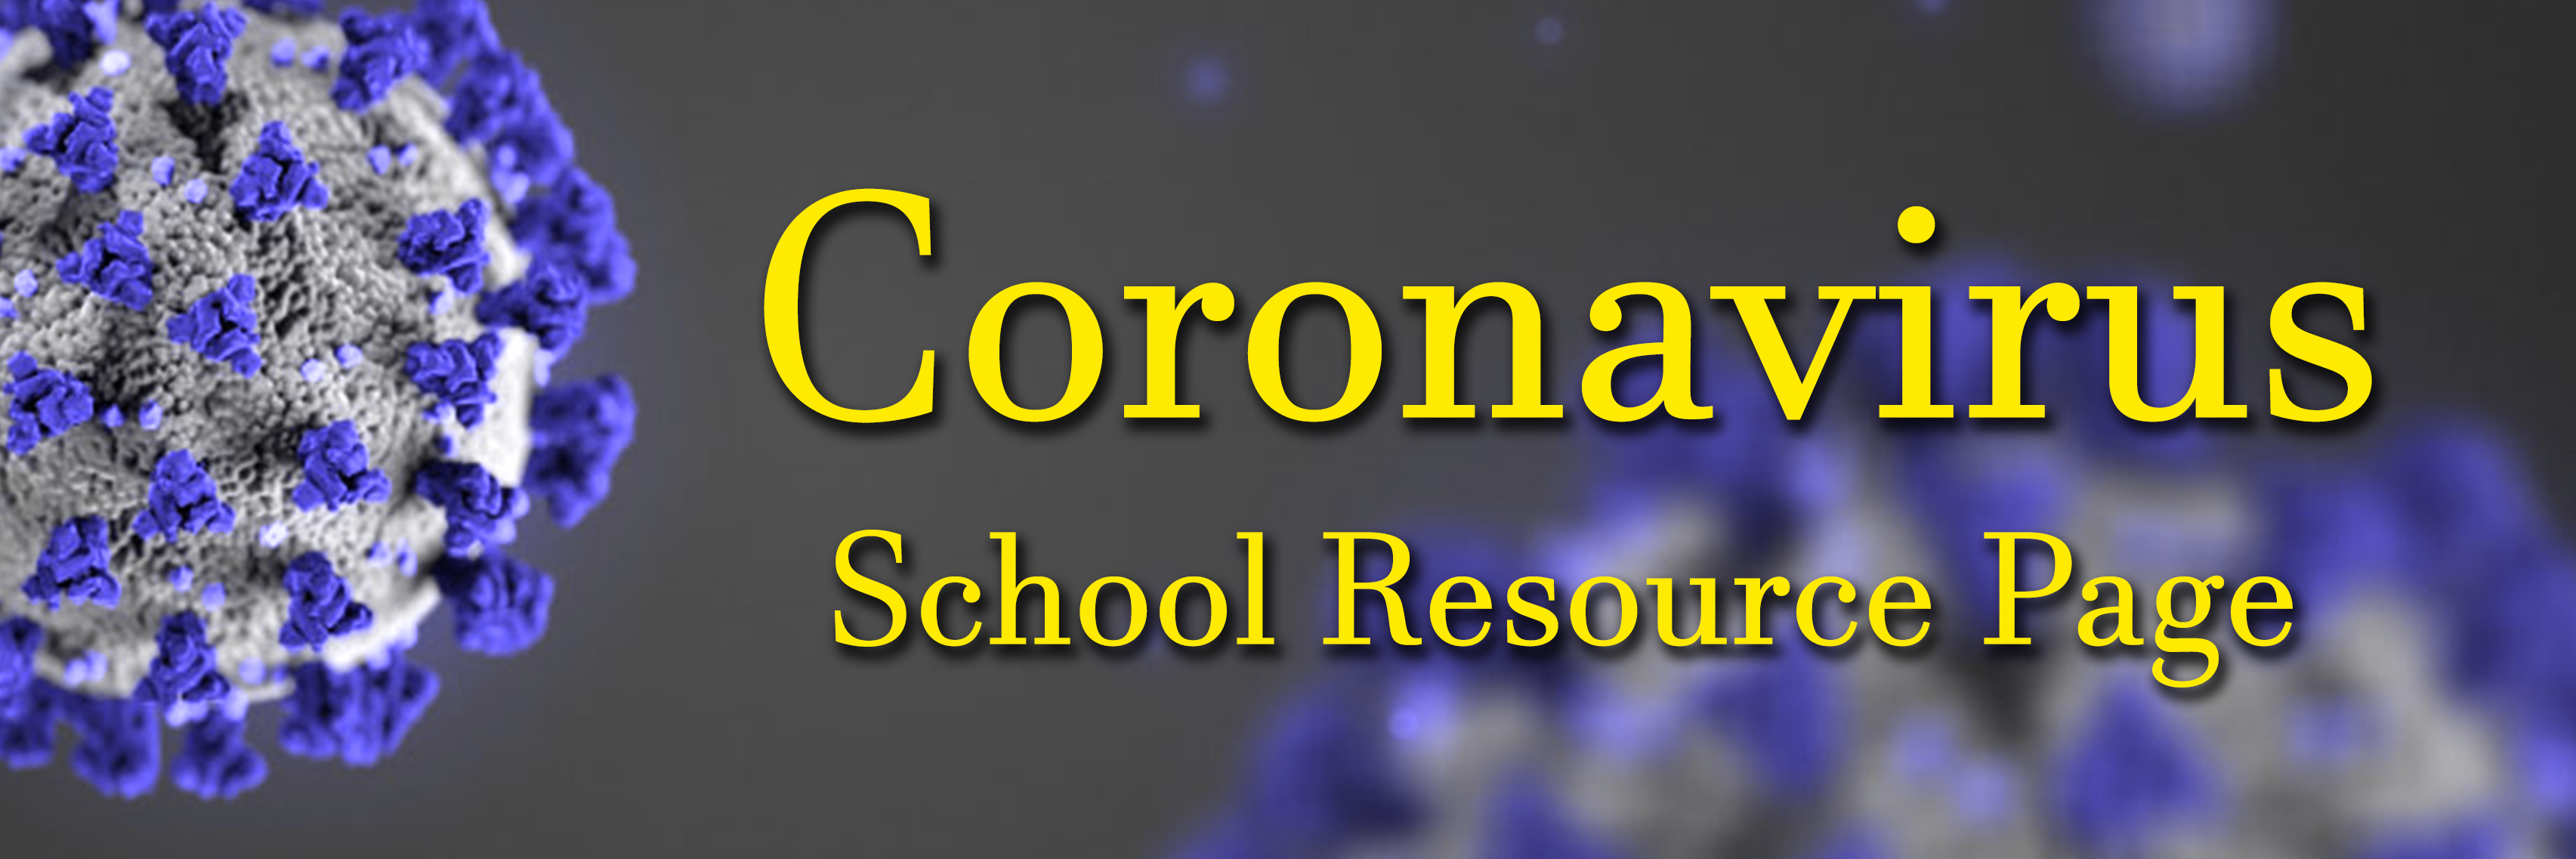 Coronnavirus School Resource Page banner